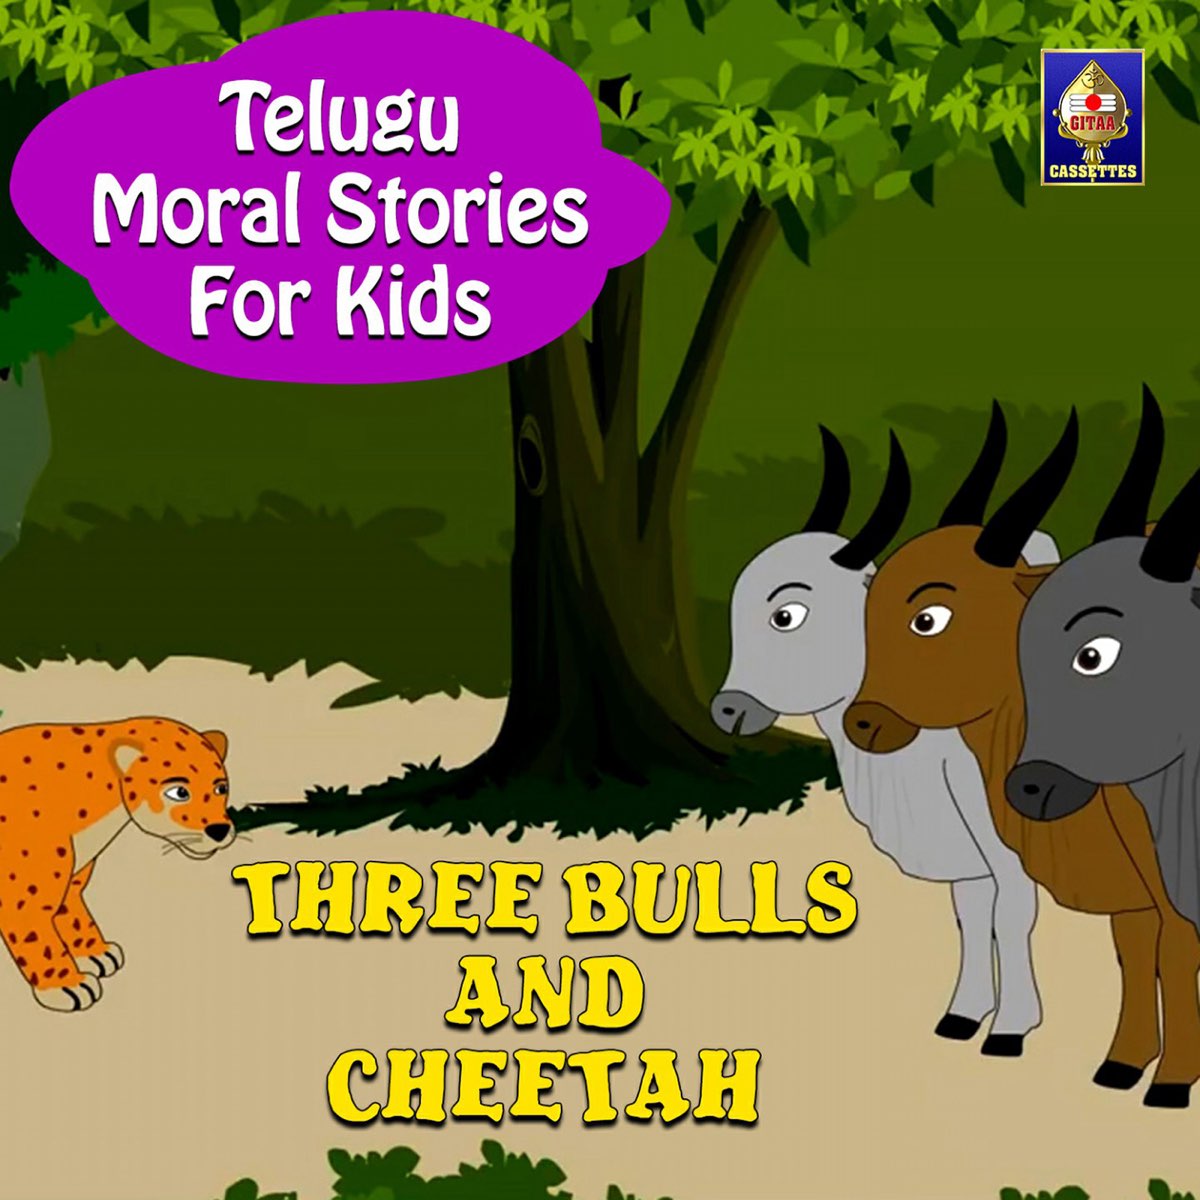 Telugu Moral Stories For Kids - Three Bulls and Cheetah - Single by Sandeep  on Apple Music